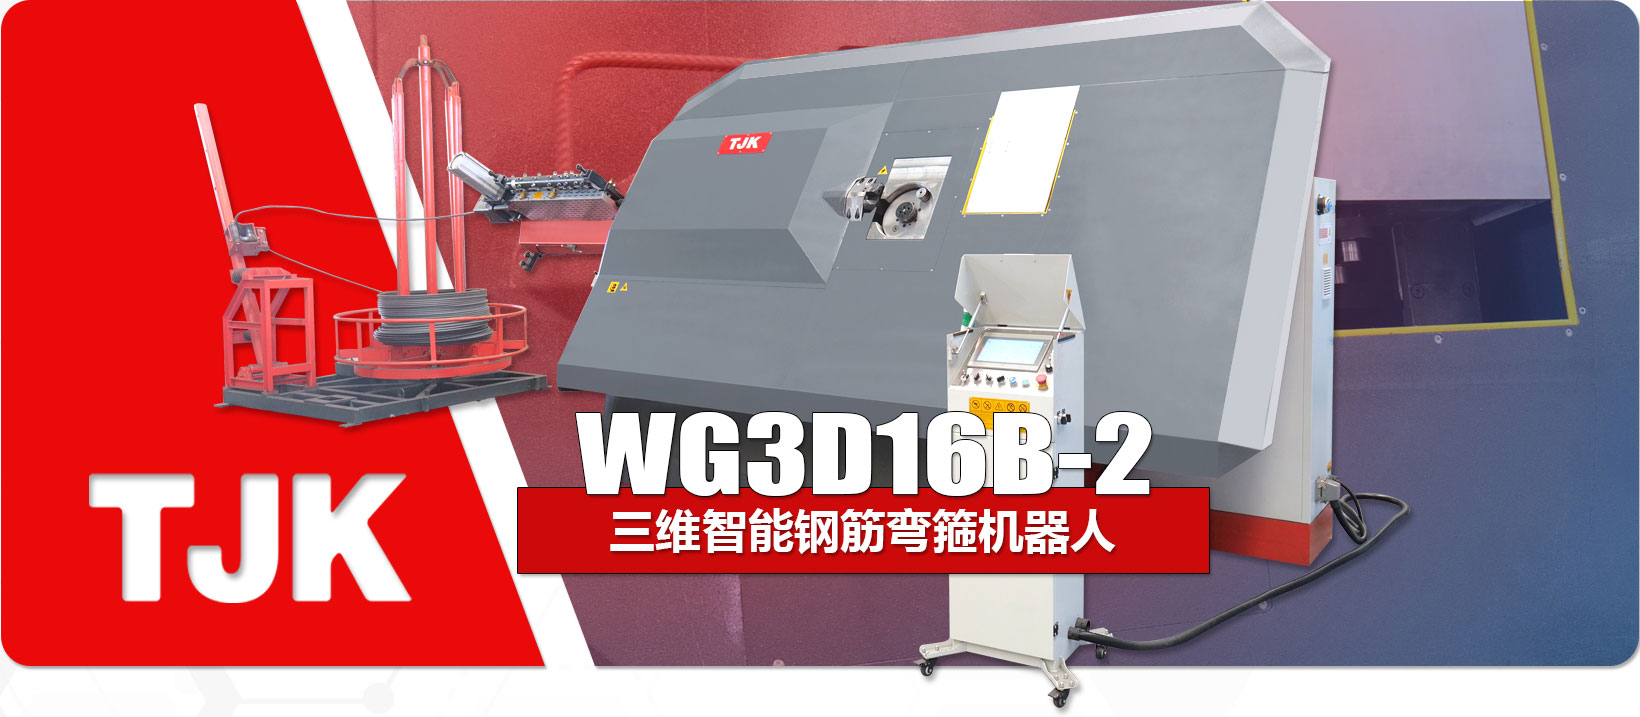 WG3D16B-2产品特点_05.jpg